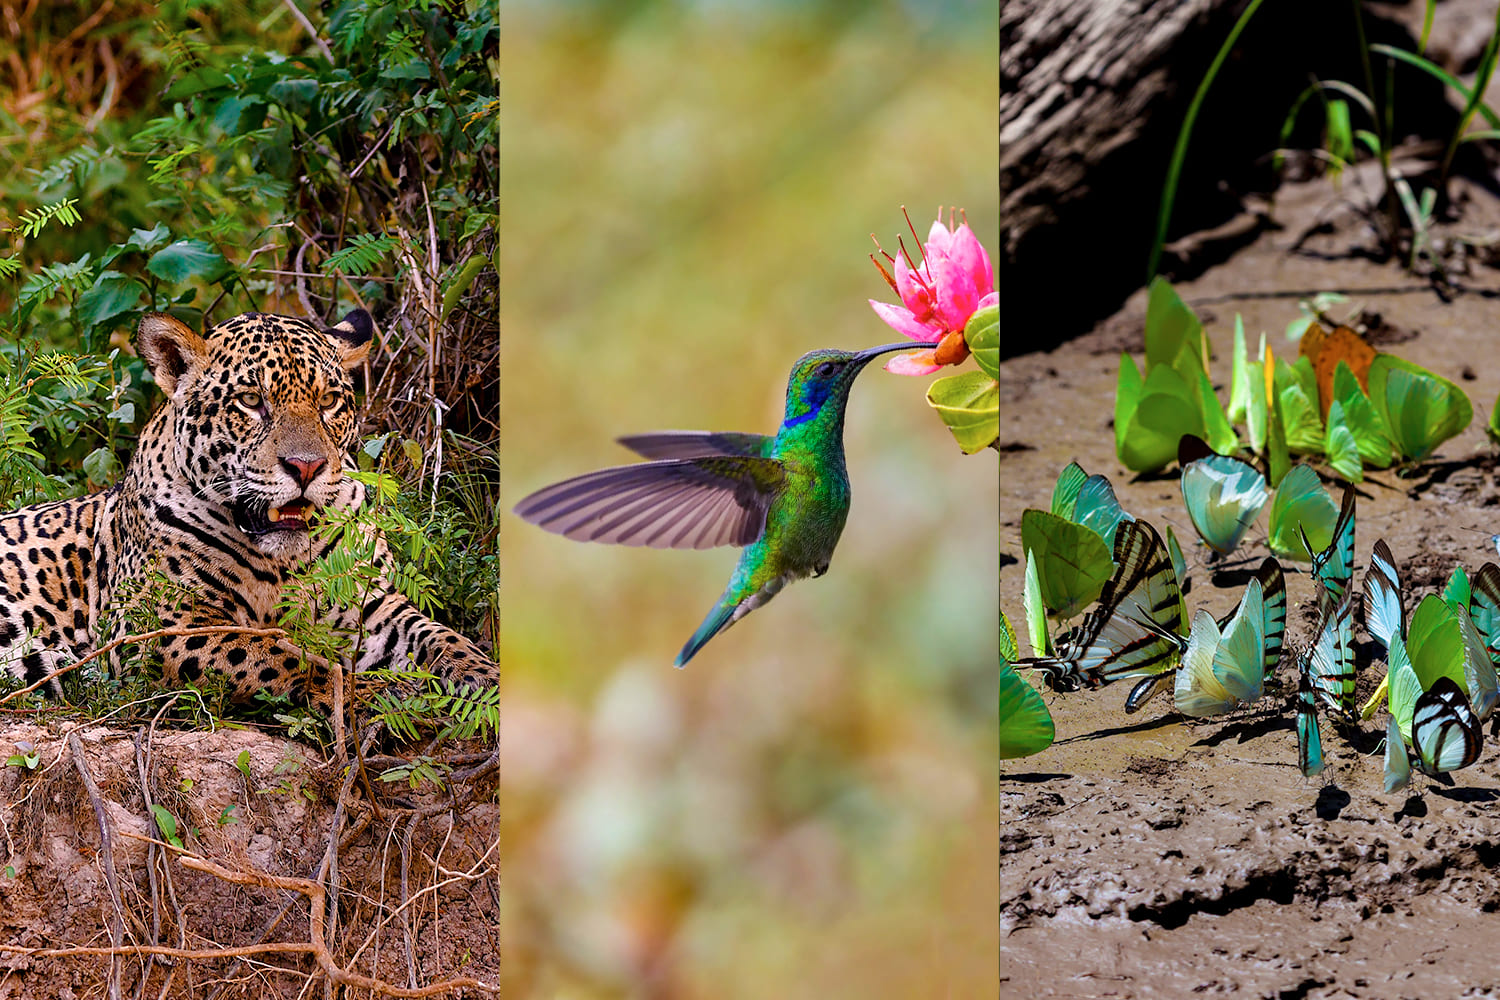 Flora and fauna in the Manu National Park